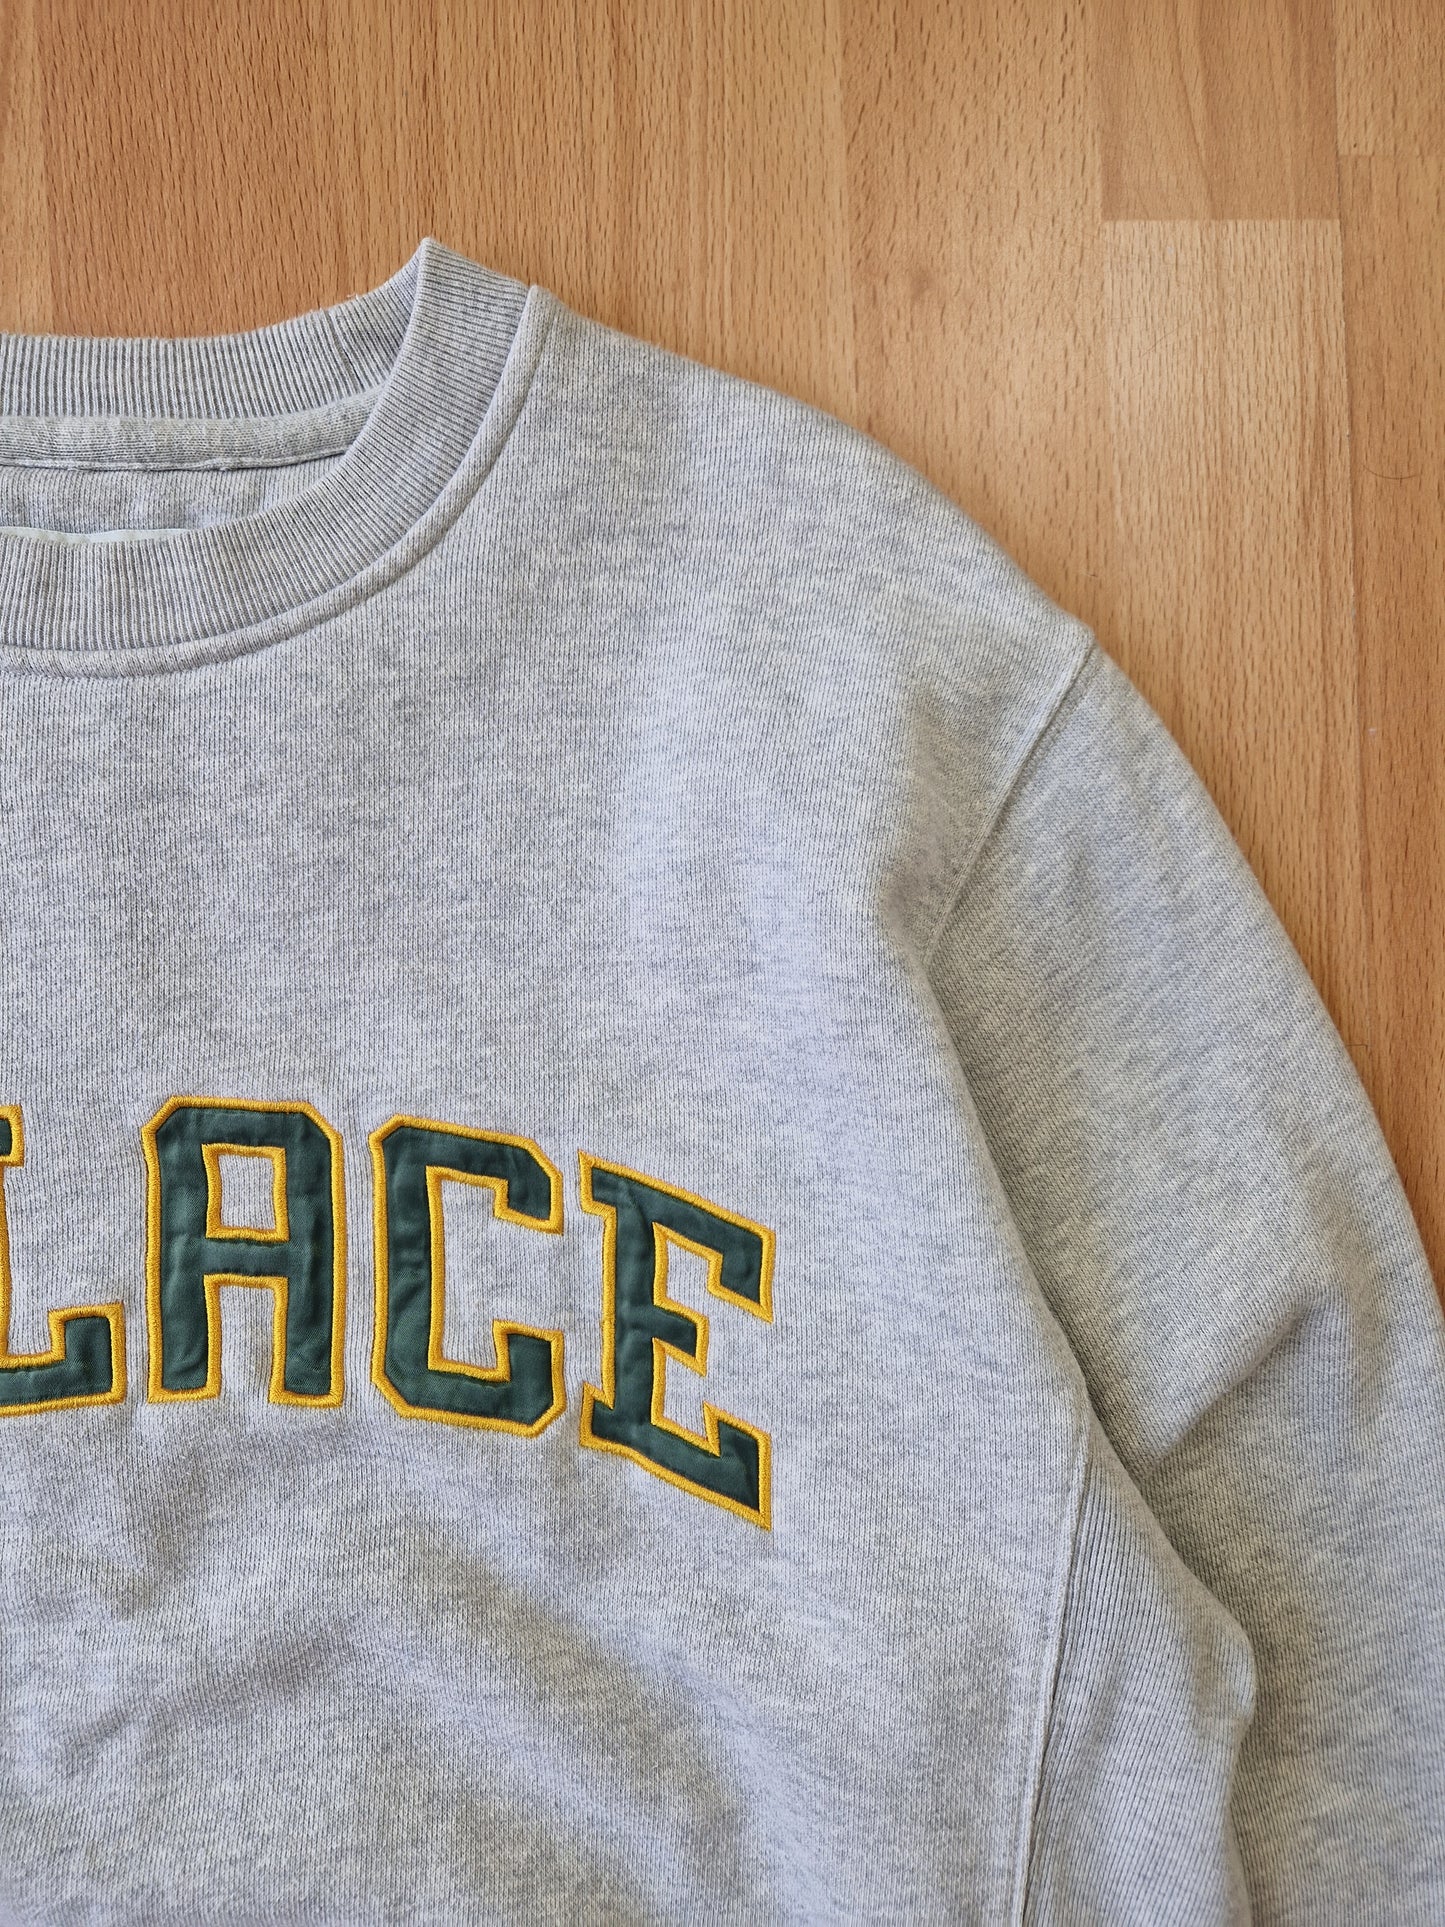 Palace 'Alas Crew' College Sweatshirt (M)